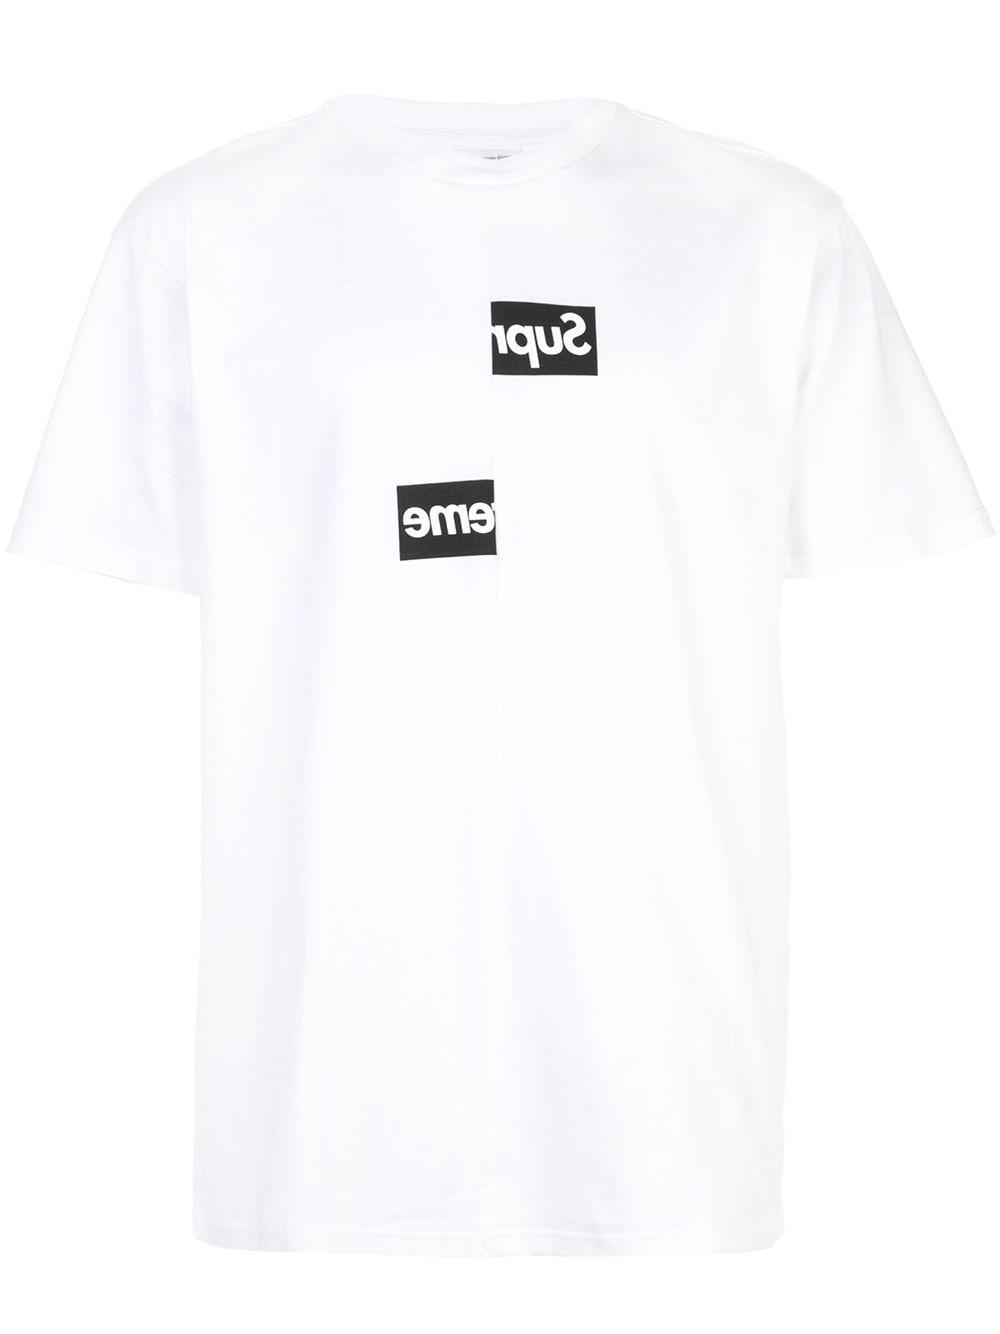 Supreme Cdg Split Box Logo Tee in White for Men - Lyst